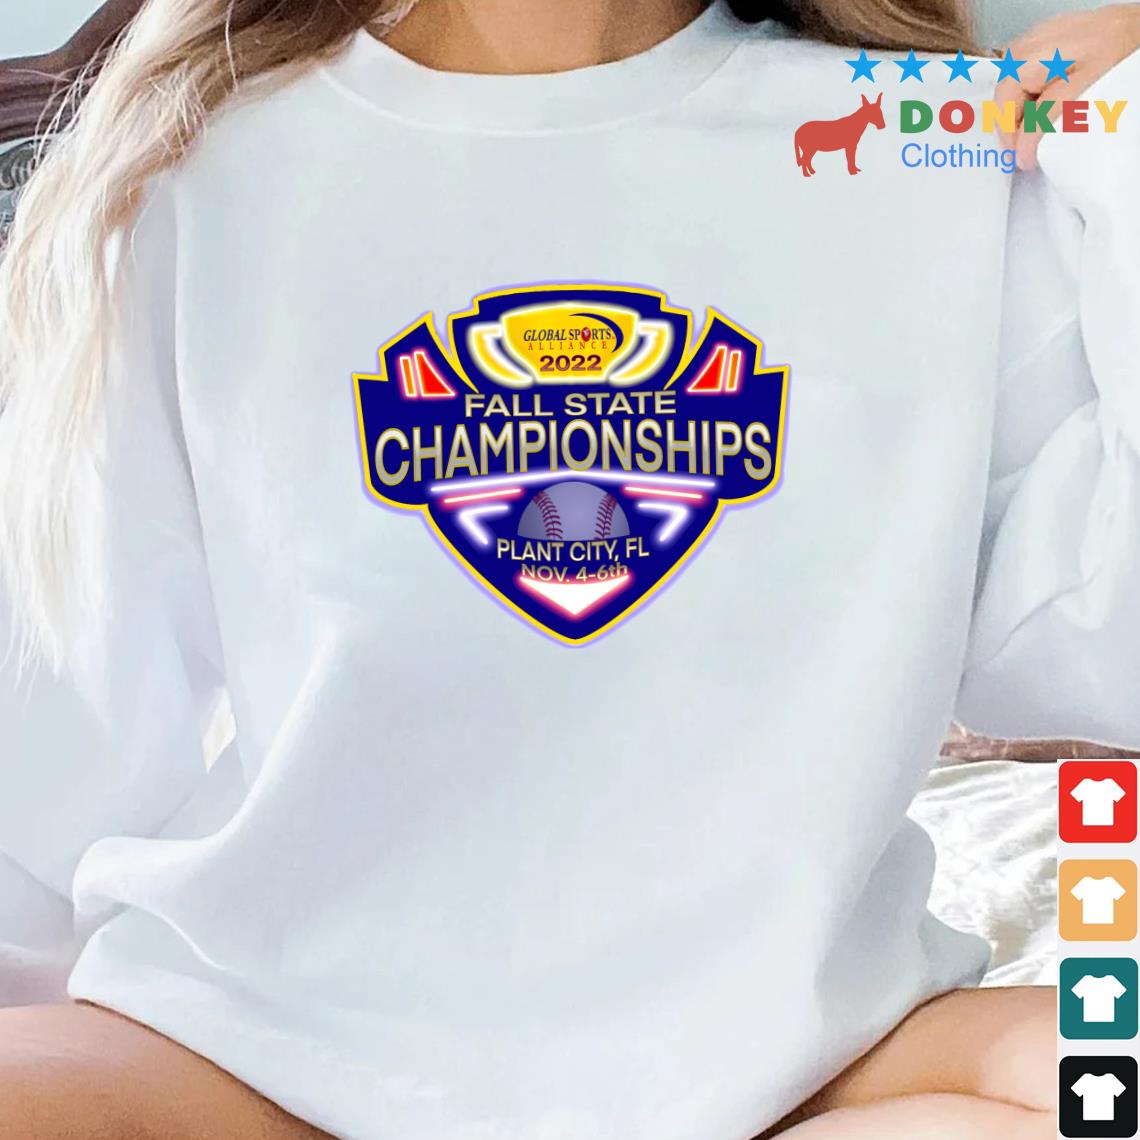 GSA Fall League Championships Plant City FL Shirt